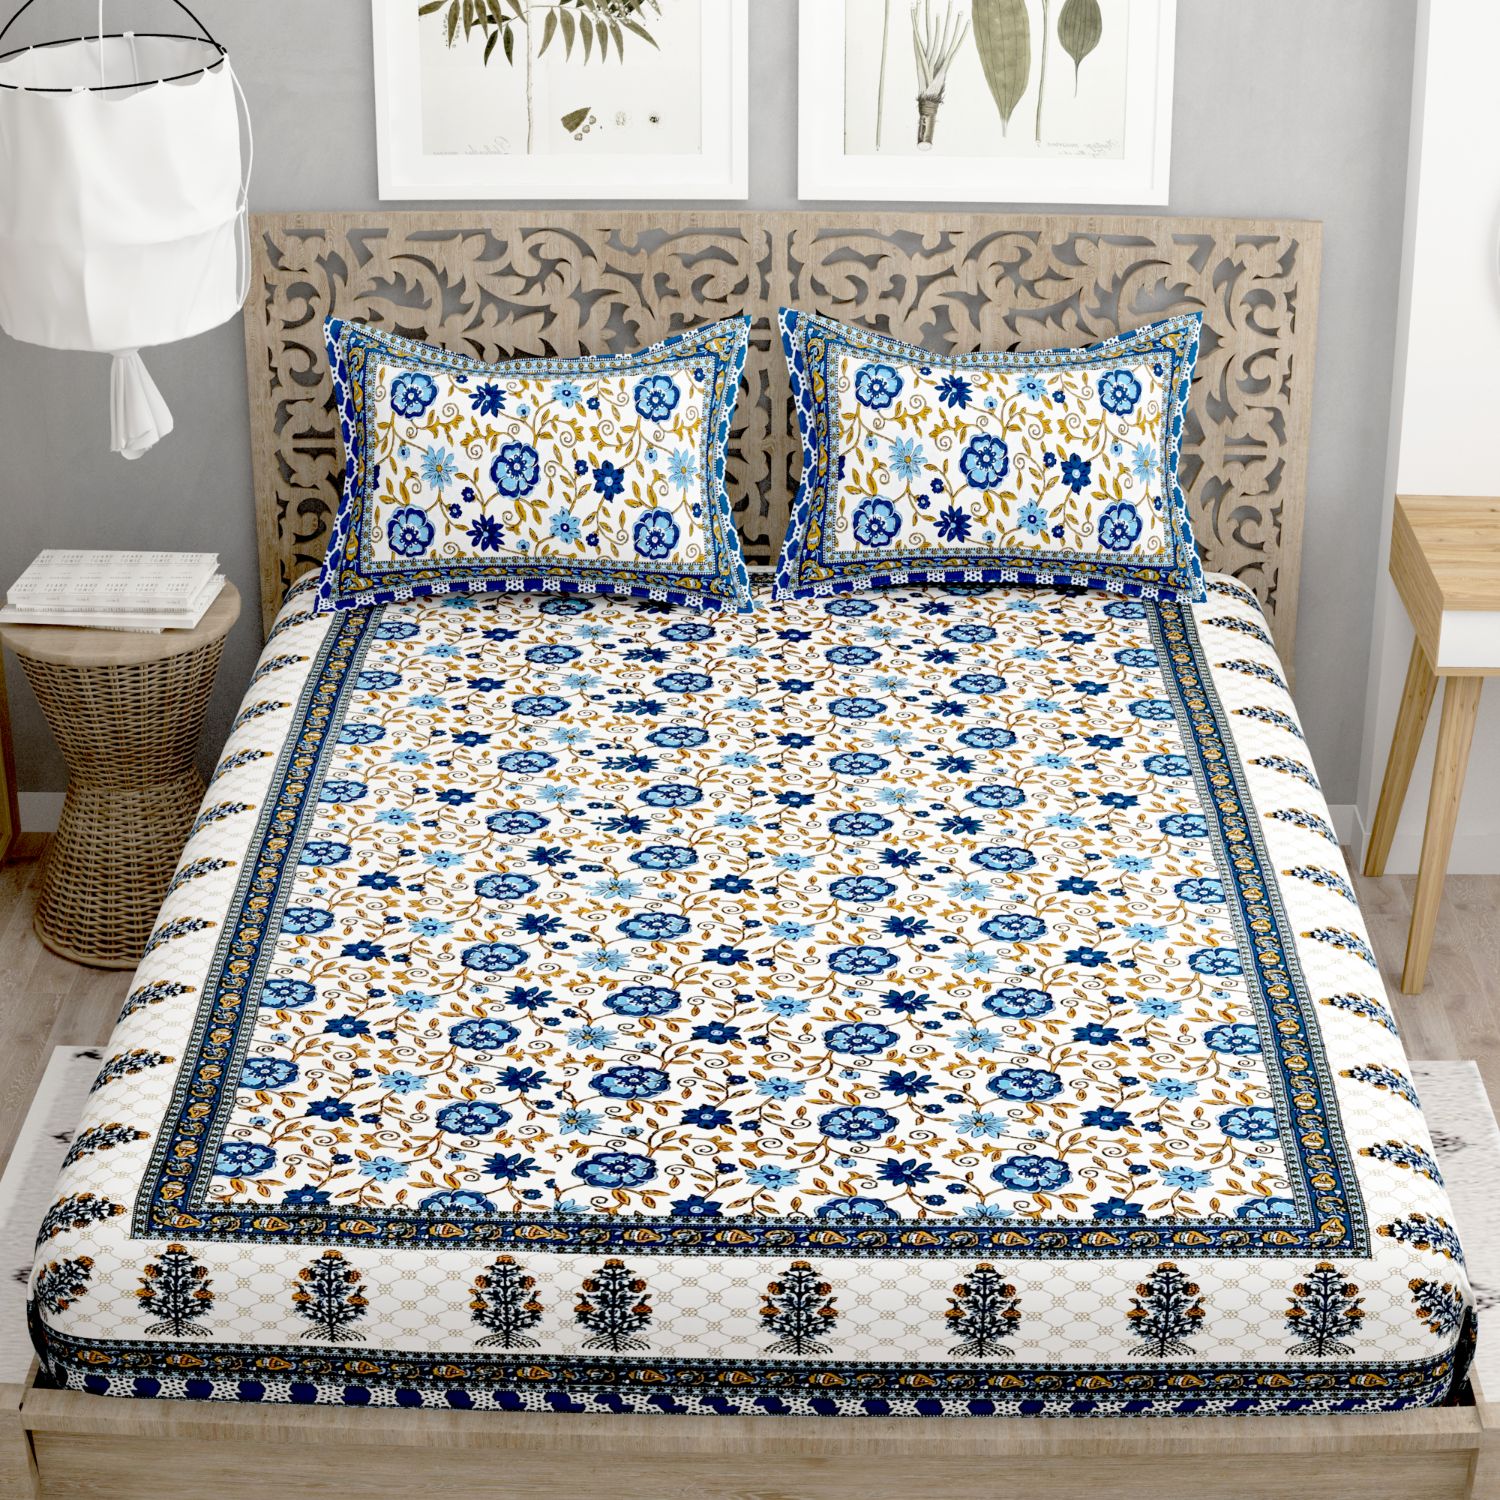 UniqChoice 180 TC Blue Color 100% Cotton Printed King Size Bedsheet With 2 Pillow Cover(ELEG-60-Blue)